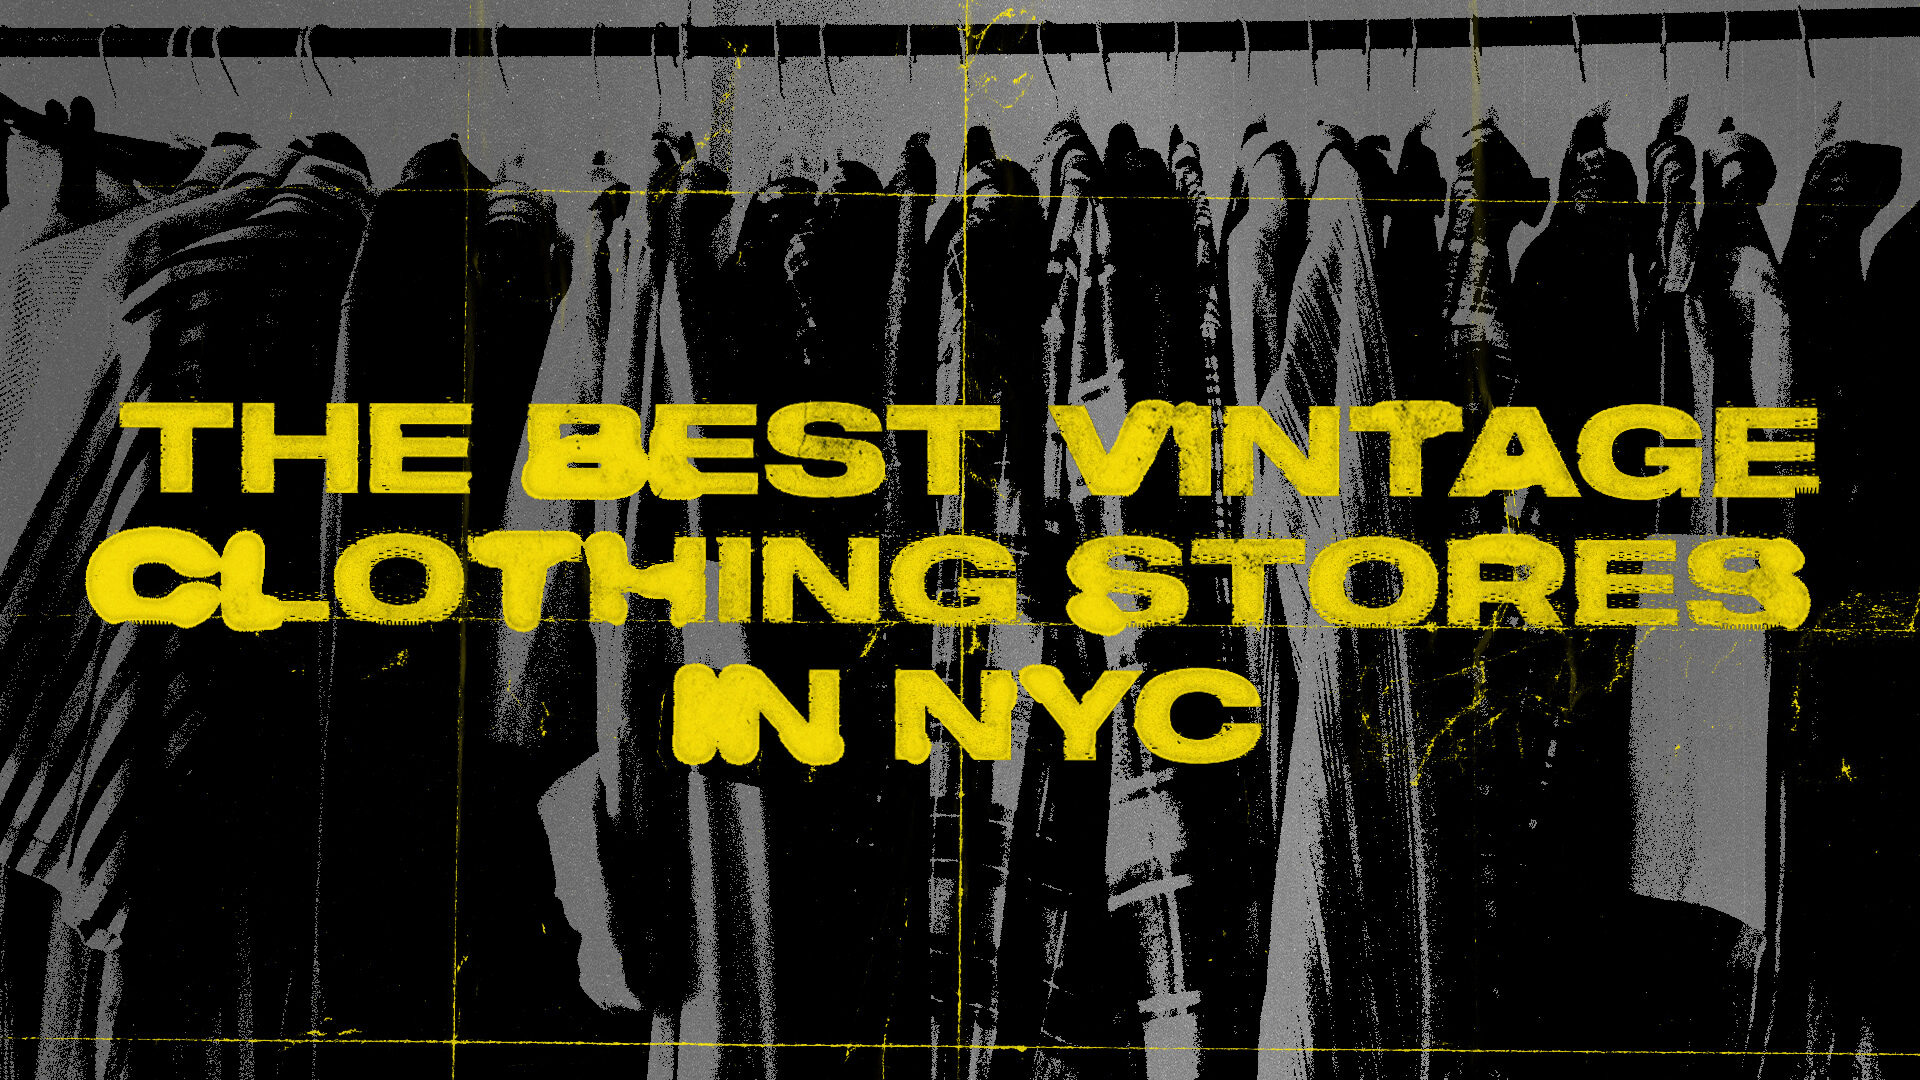 Supreme New York, black and white, brands, bw, city, new york, supreme, HD  phone wallpaper